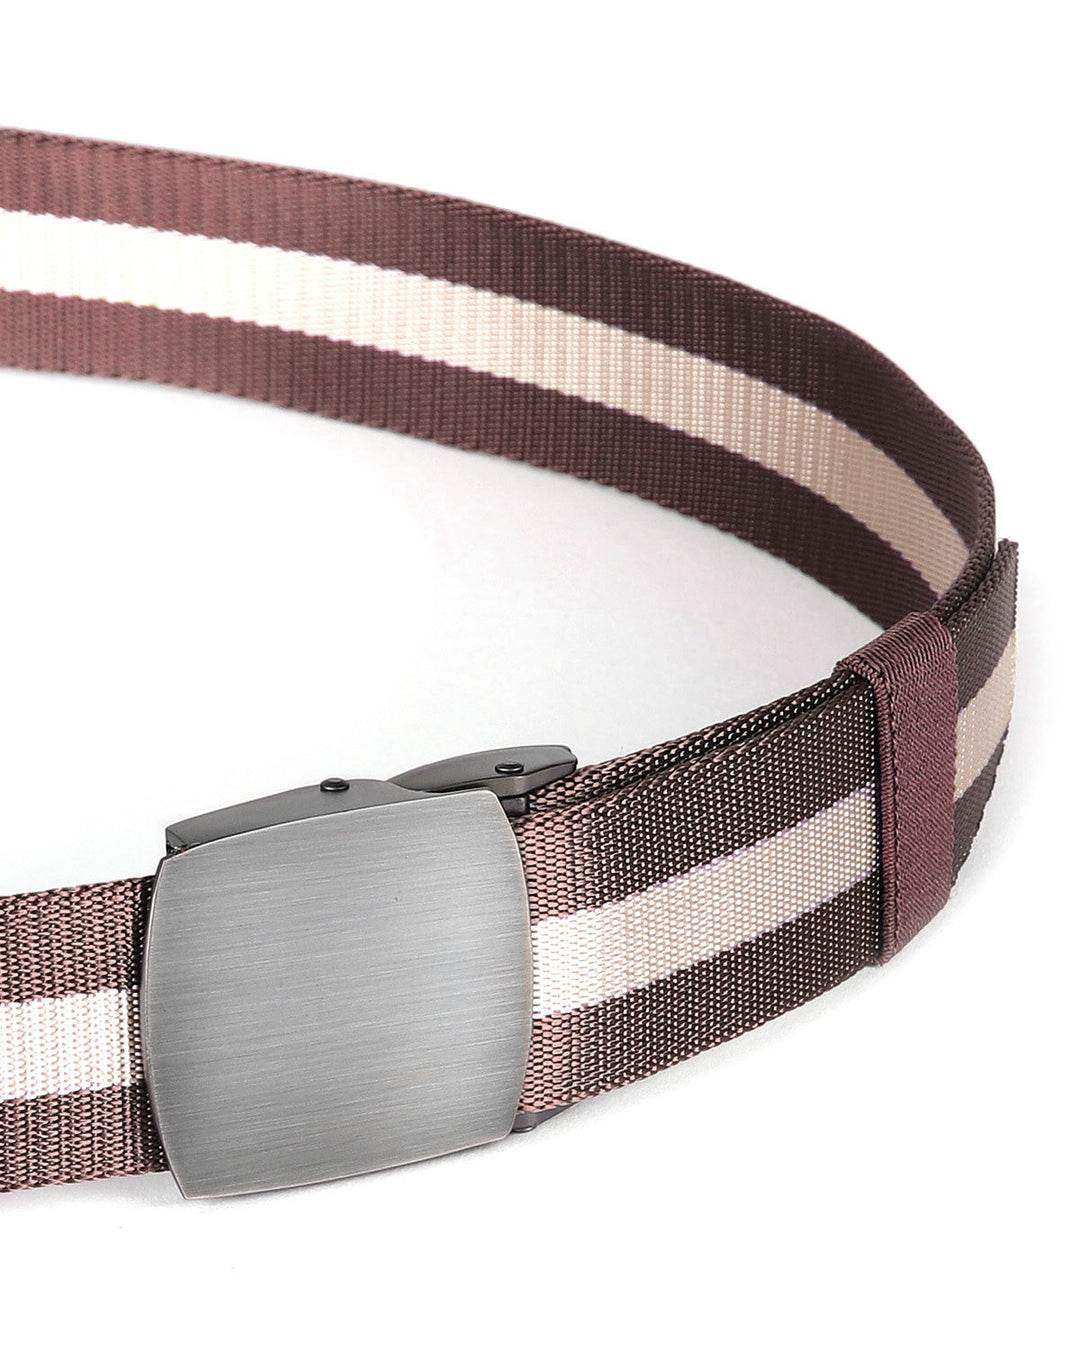 One Size Adjustable Strap Stripe Nylon Web Belt with Metal Buckle